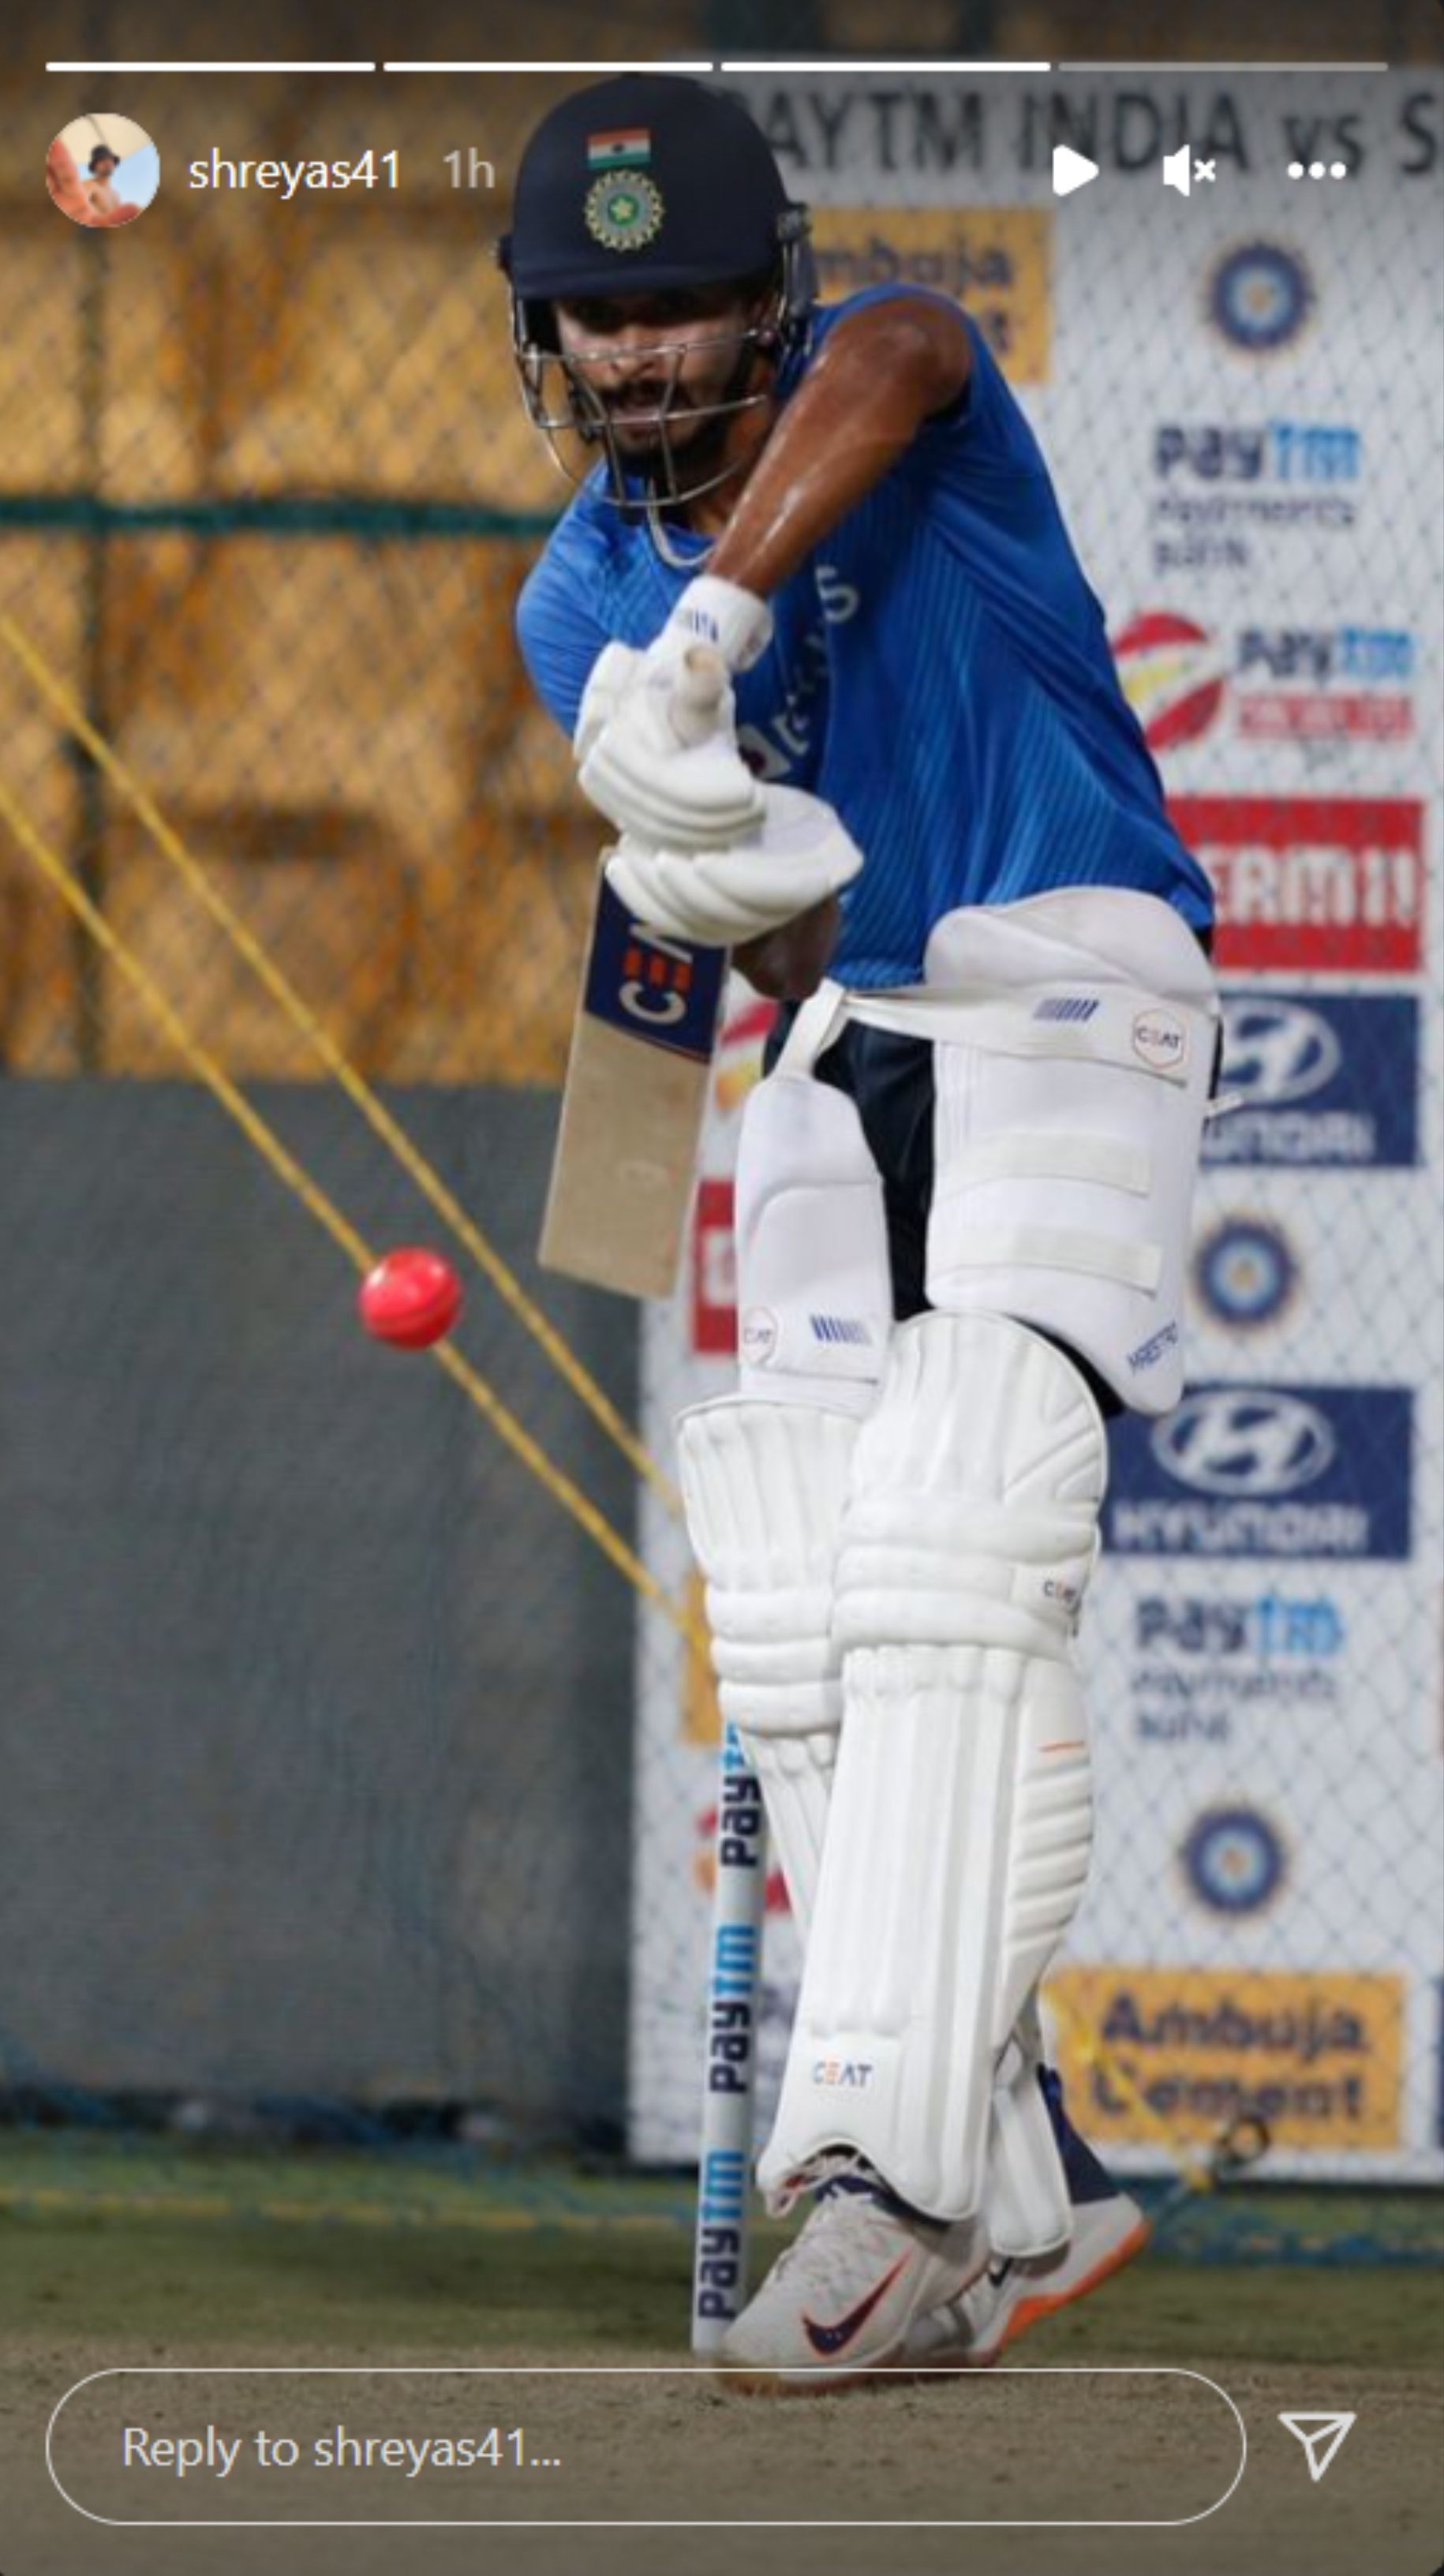 Shreyas batting in the nets.